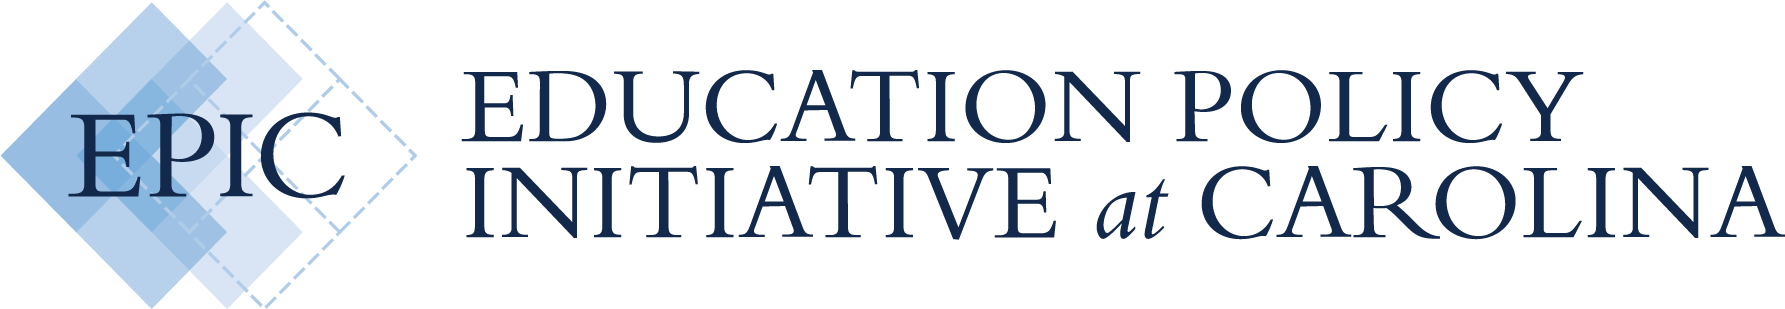  Educational Policy Initiative at Carolina